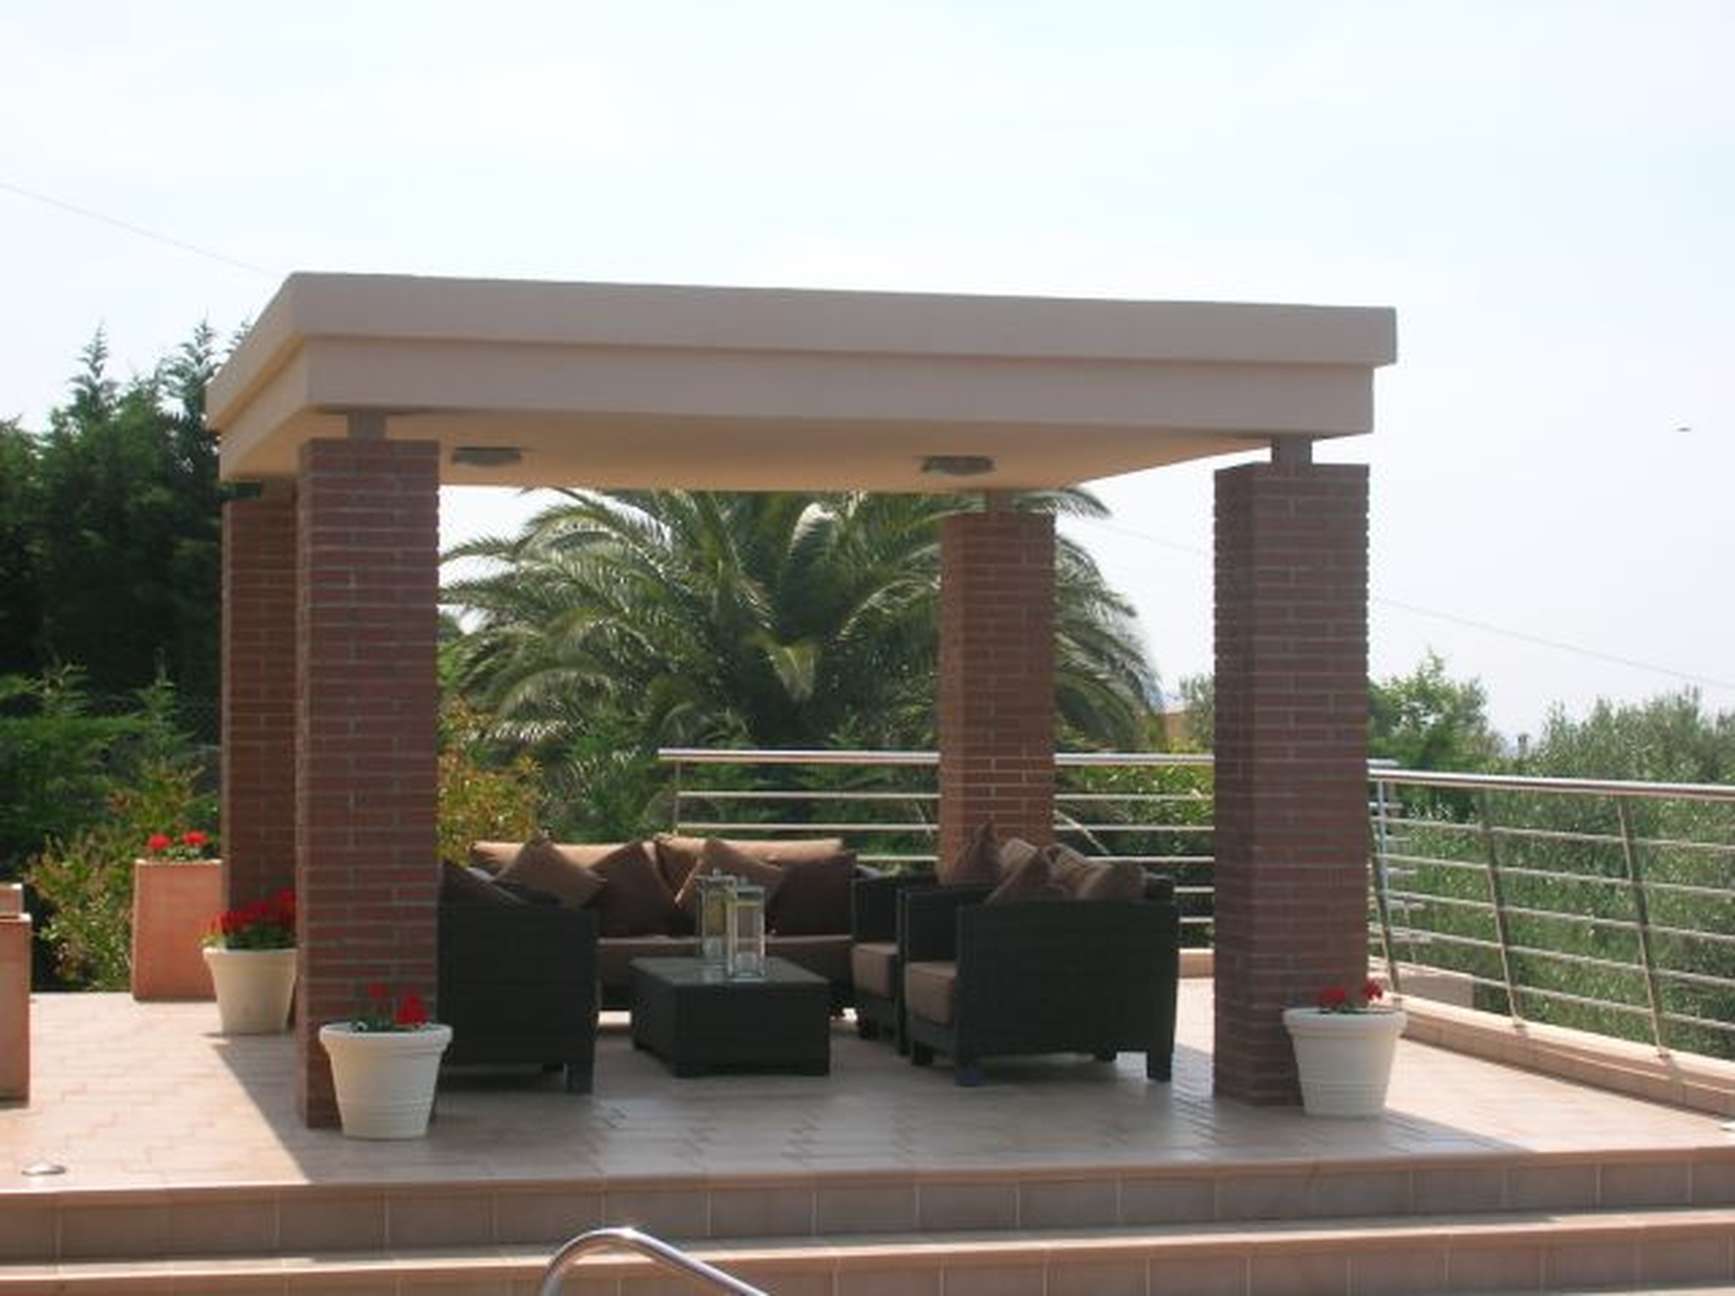 Villa with panoramic sea views